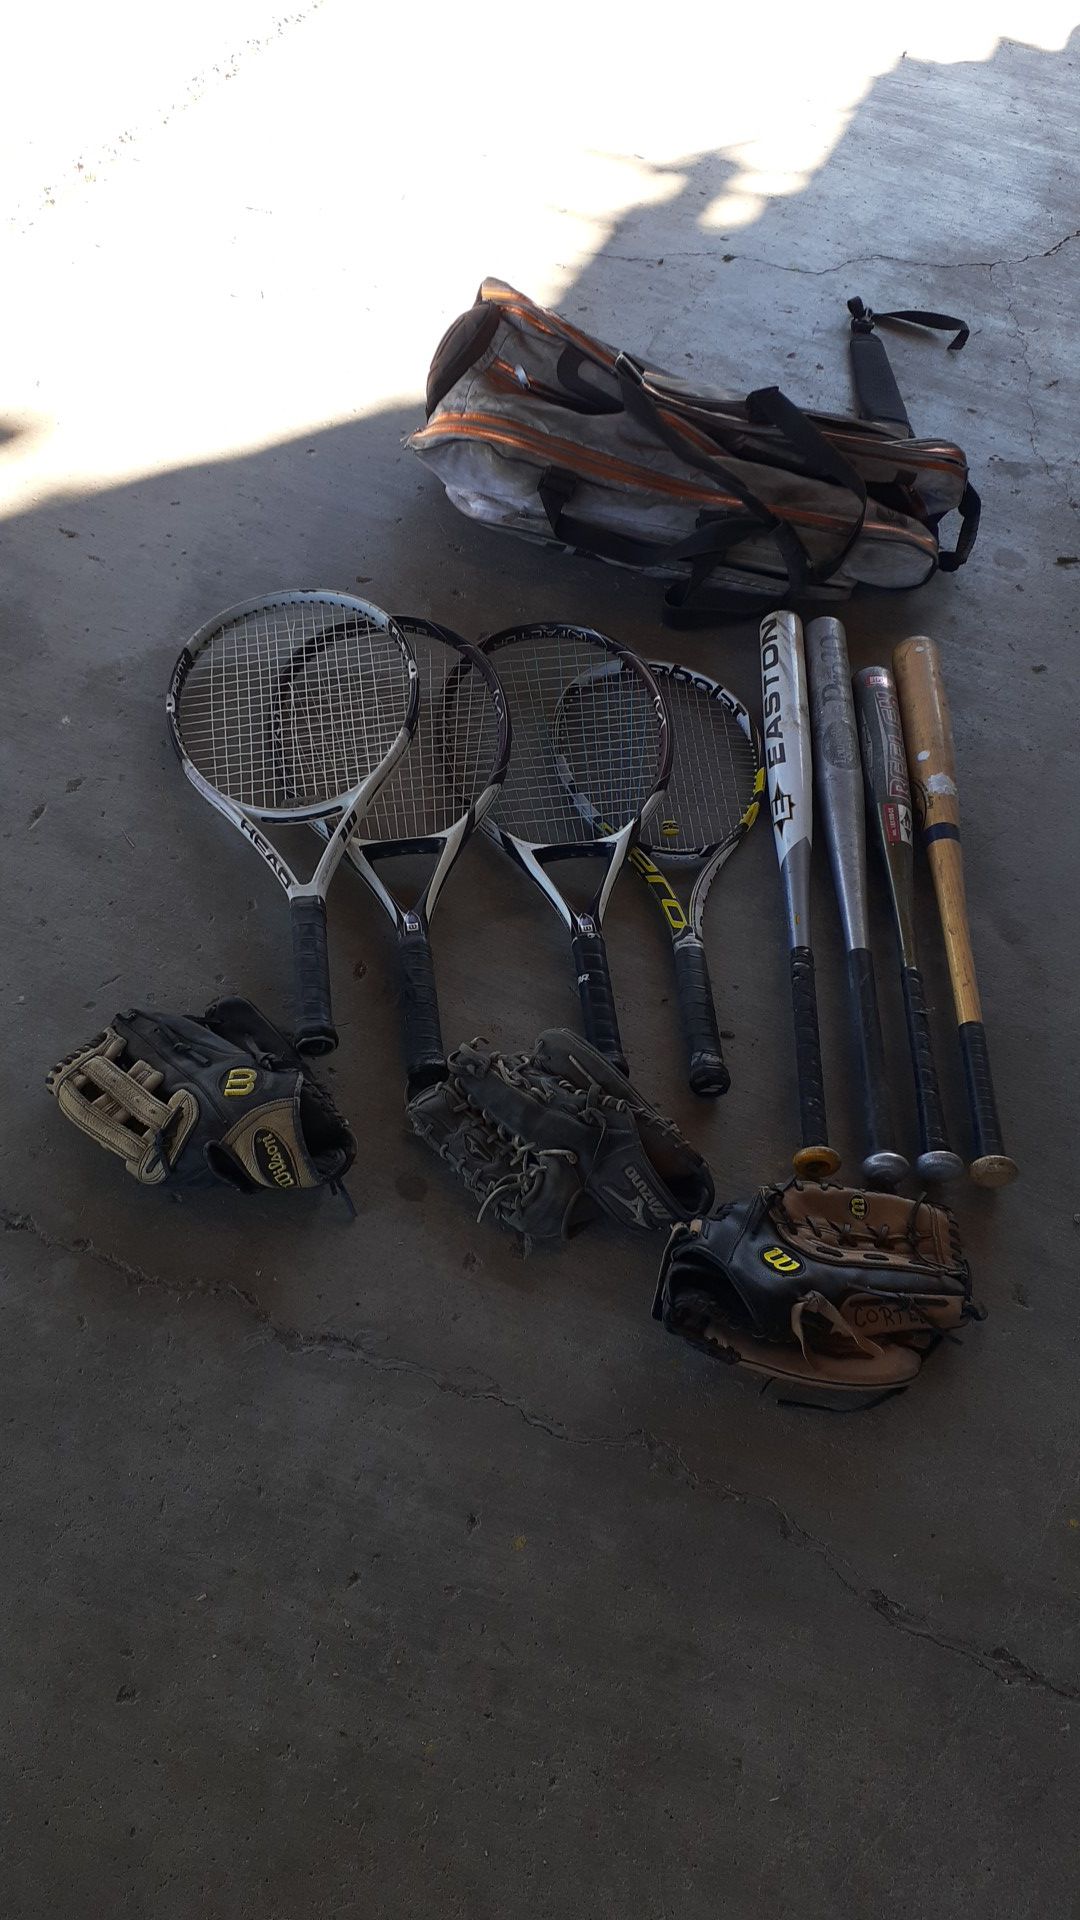 Sporting goods, 4 tennis racquets, Softball bats and gloves